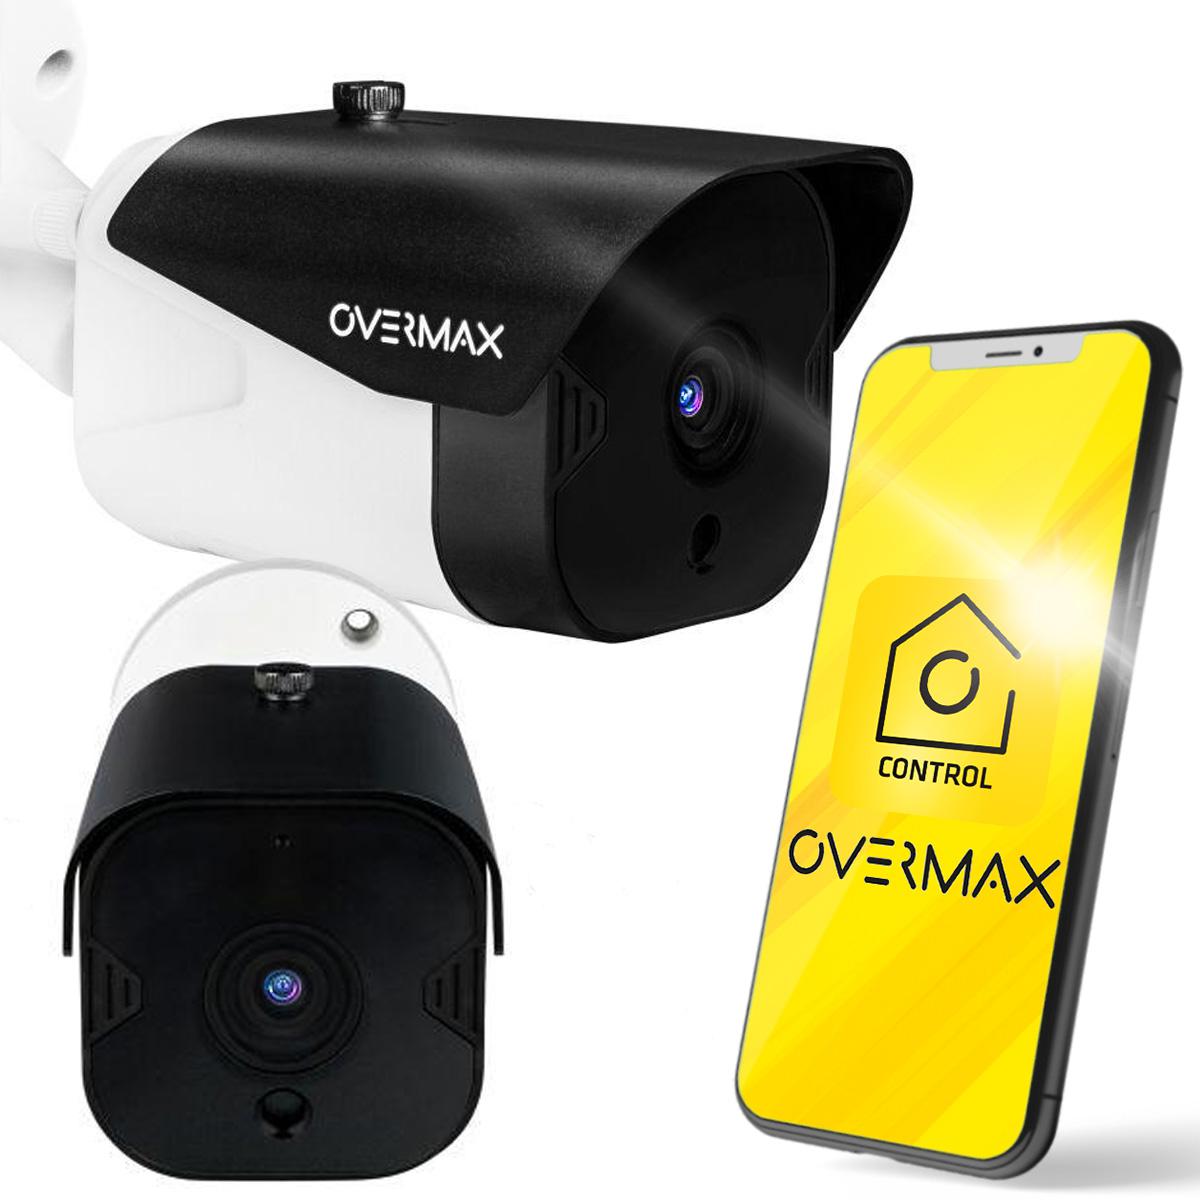 Kamera IP Overmax OV-Camspot 4.7 pro - najważniejsze funkcje: